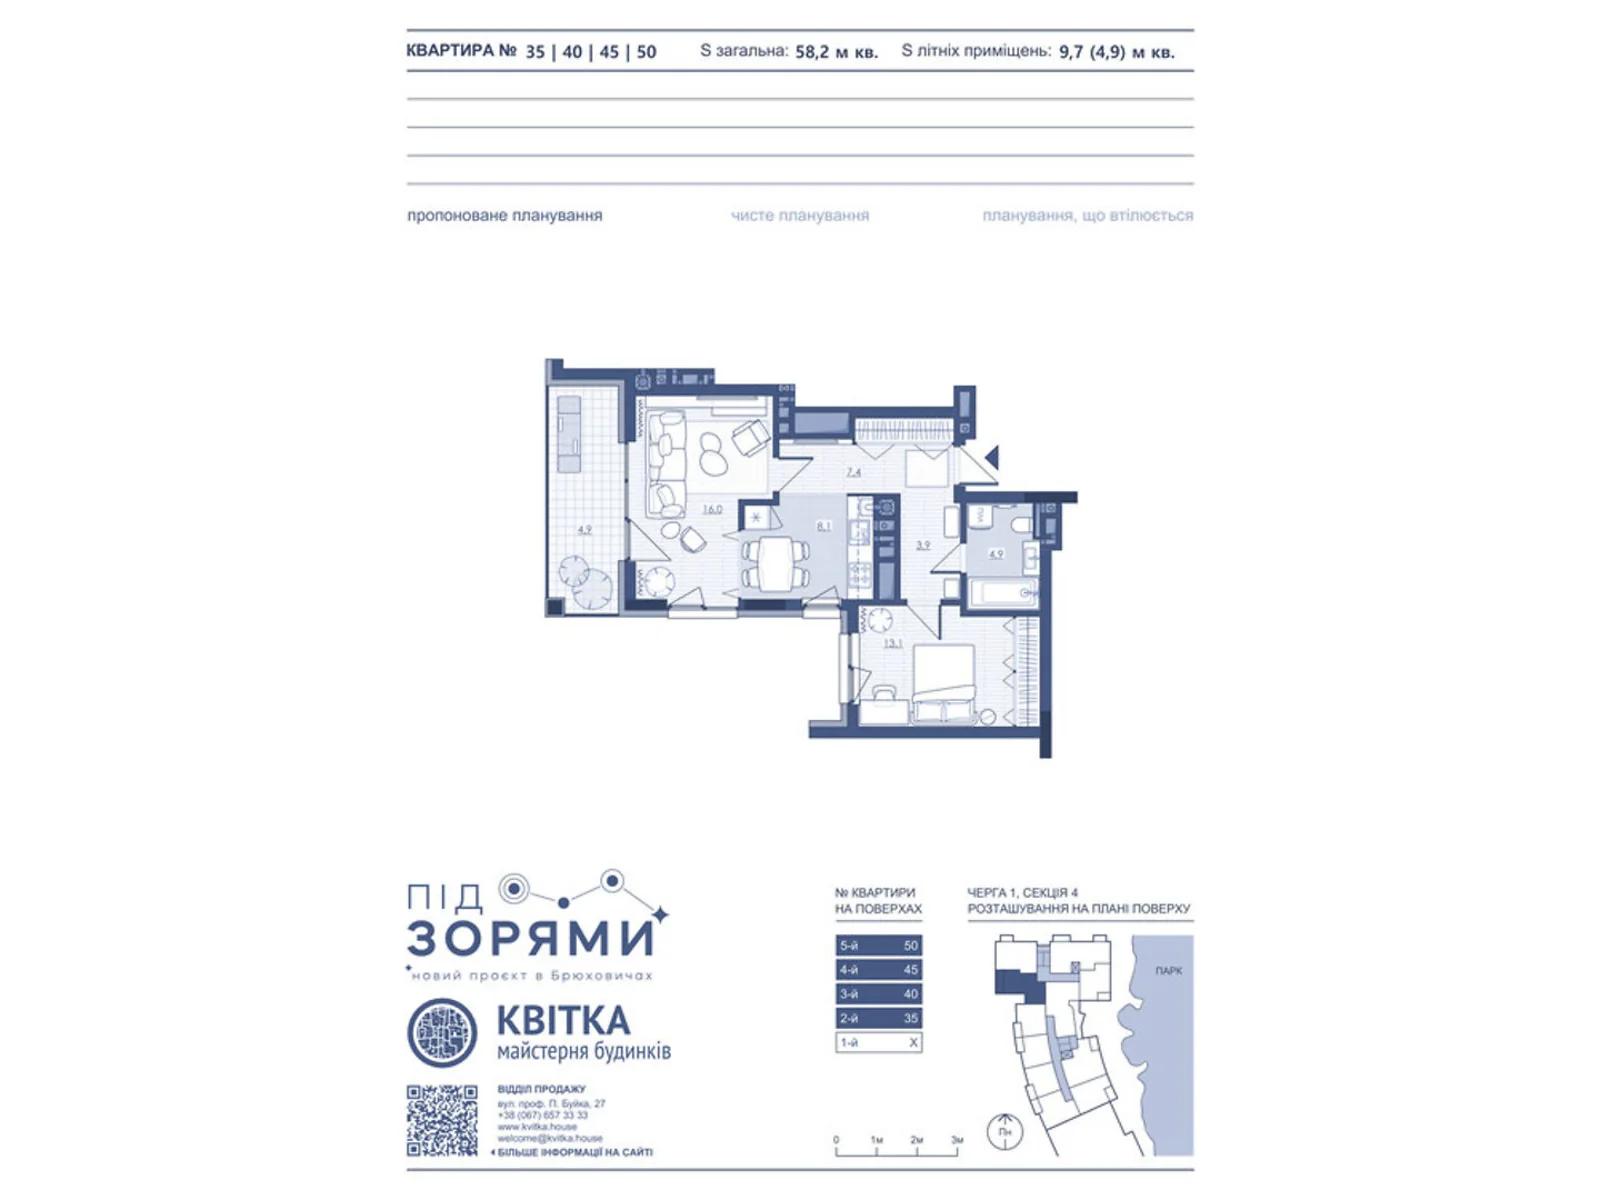 Продается 1-комнатная квартира 58.2 кв. м в Брюховичах - фото 1